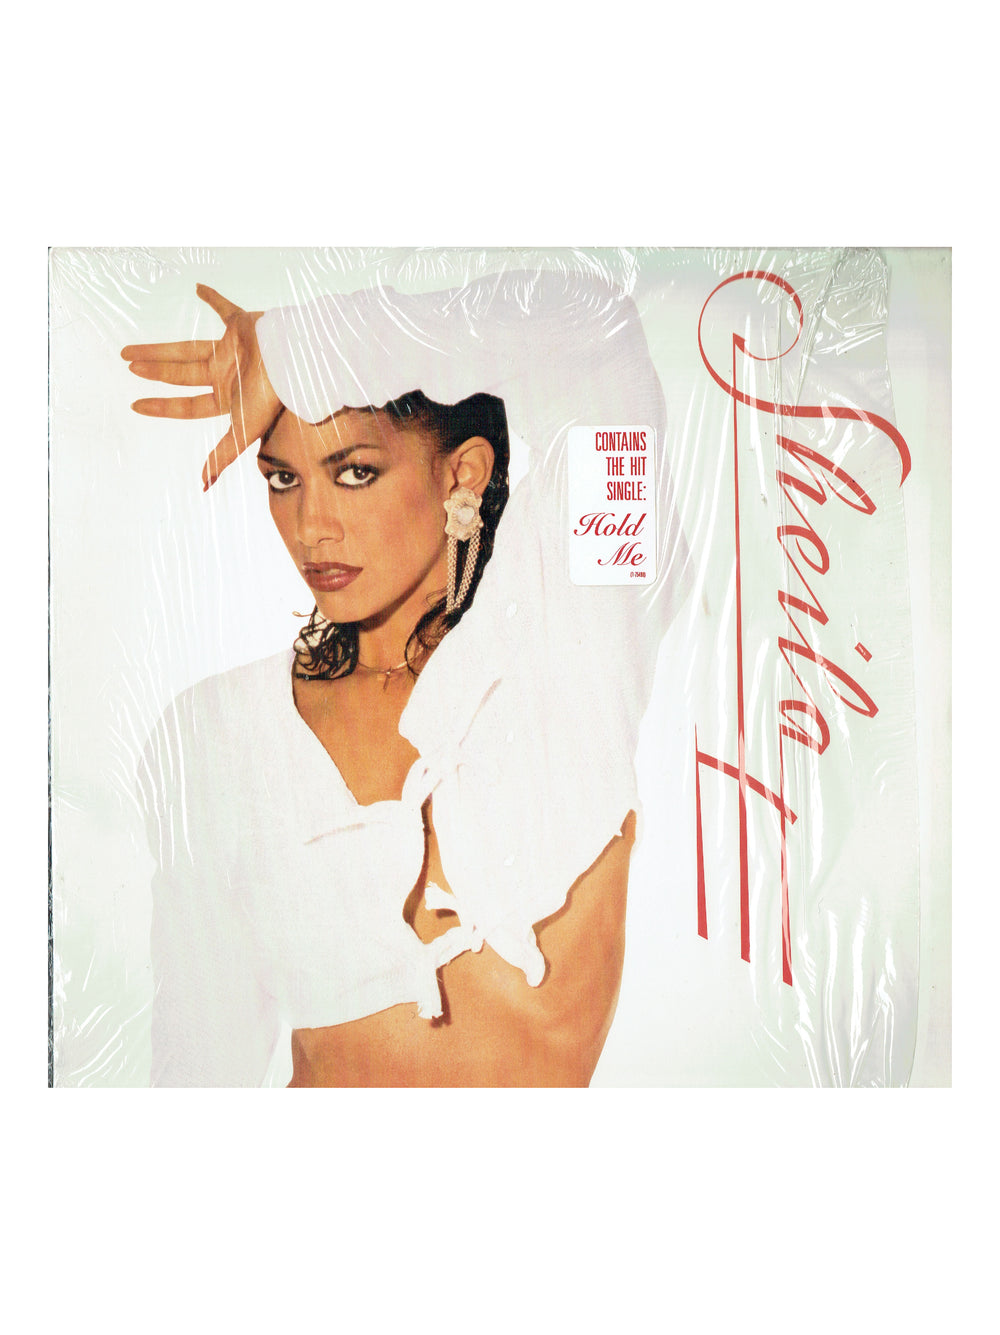 Prince – Prince – Sheila E Self Titled Vinyl Album 10 Tracks USA Release 1987 Paisley Park Prince NO HYPE